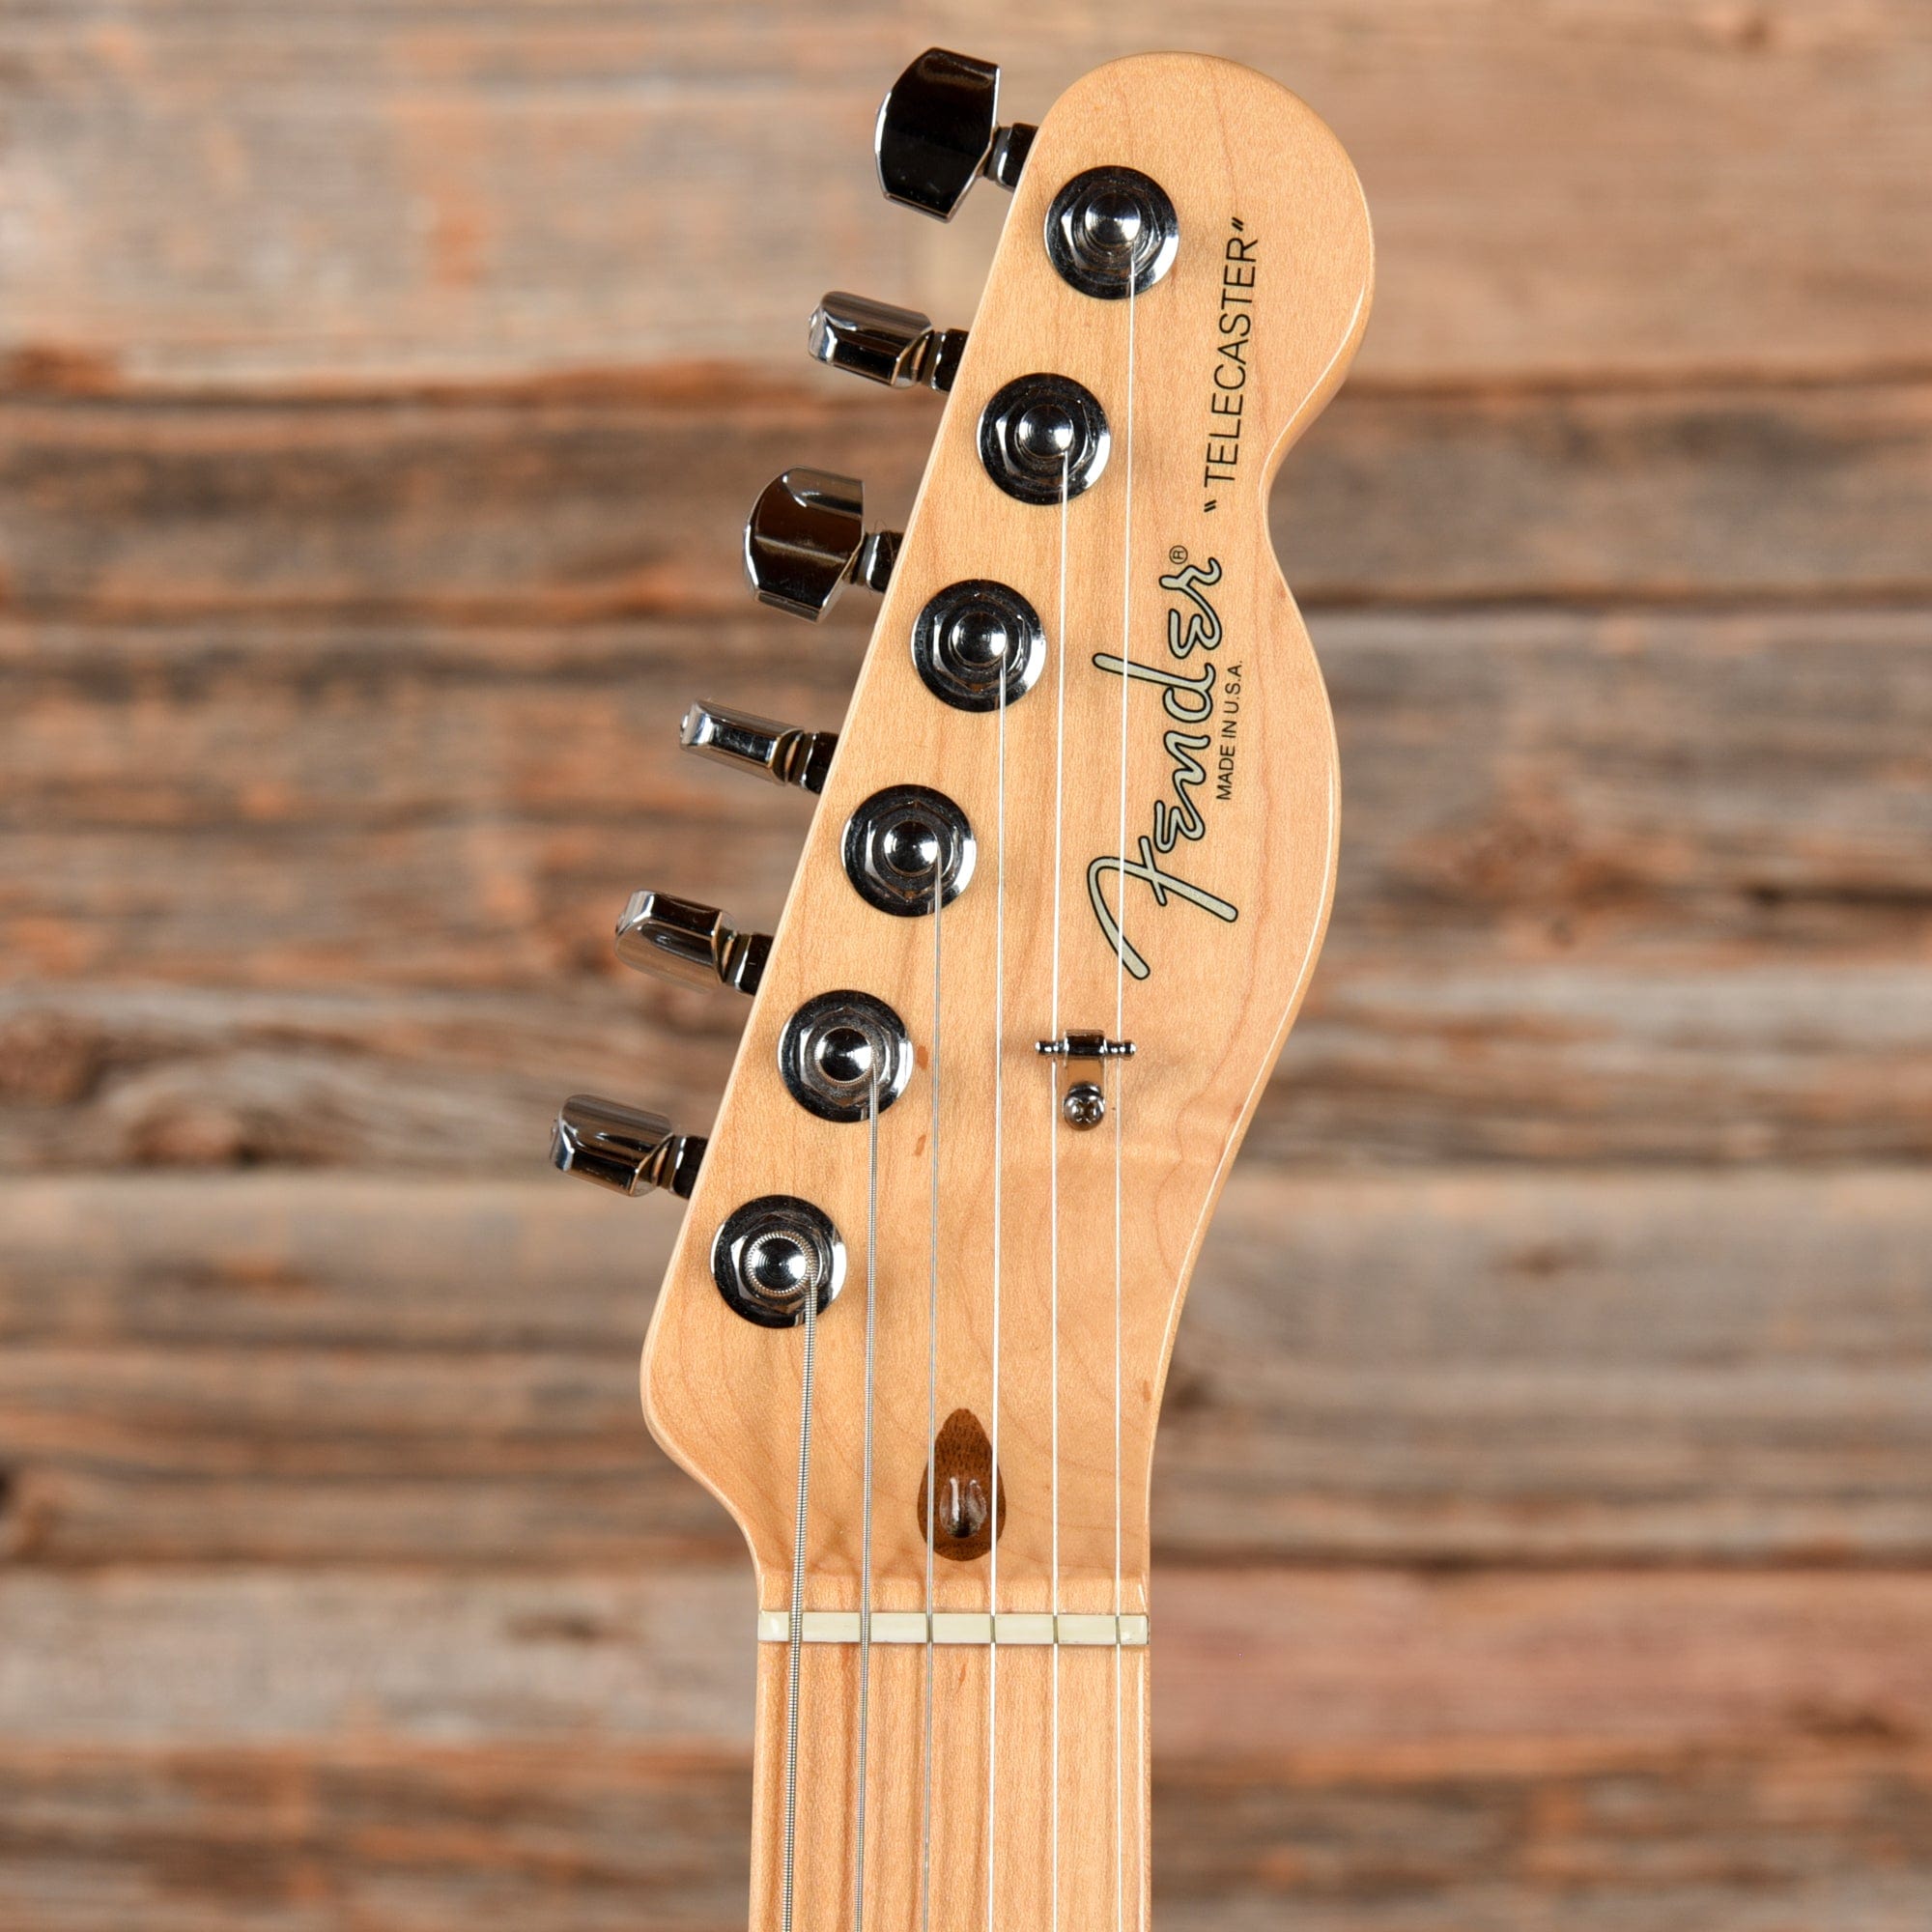 Fender American Standard Telecaster Black 2008 Electric Guitars / Solid Body